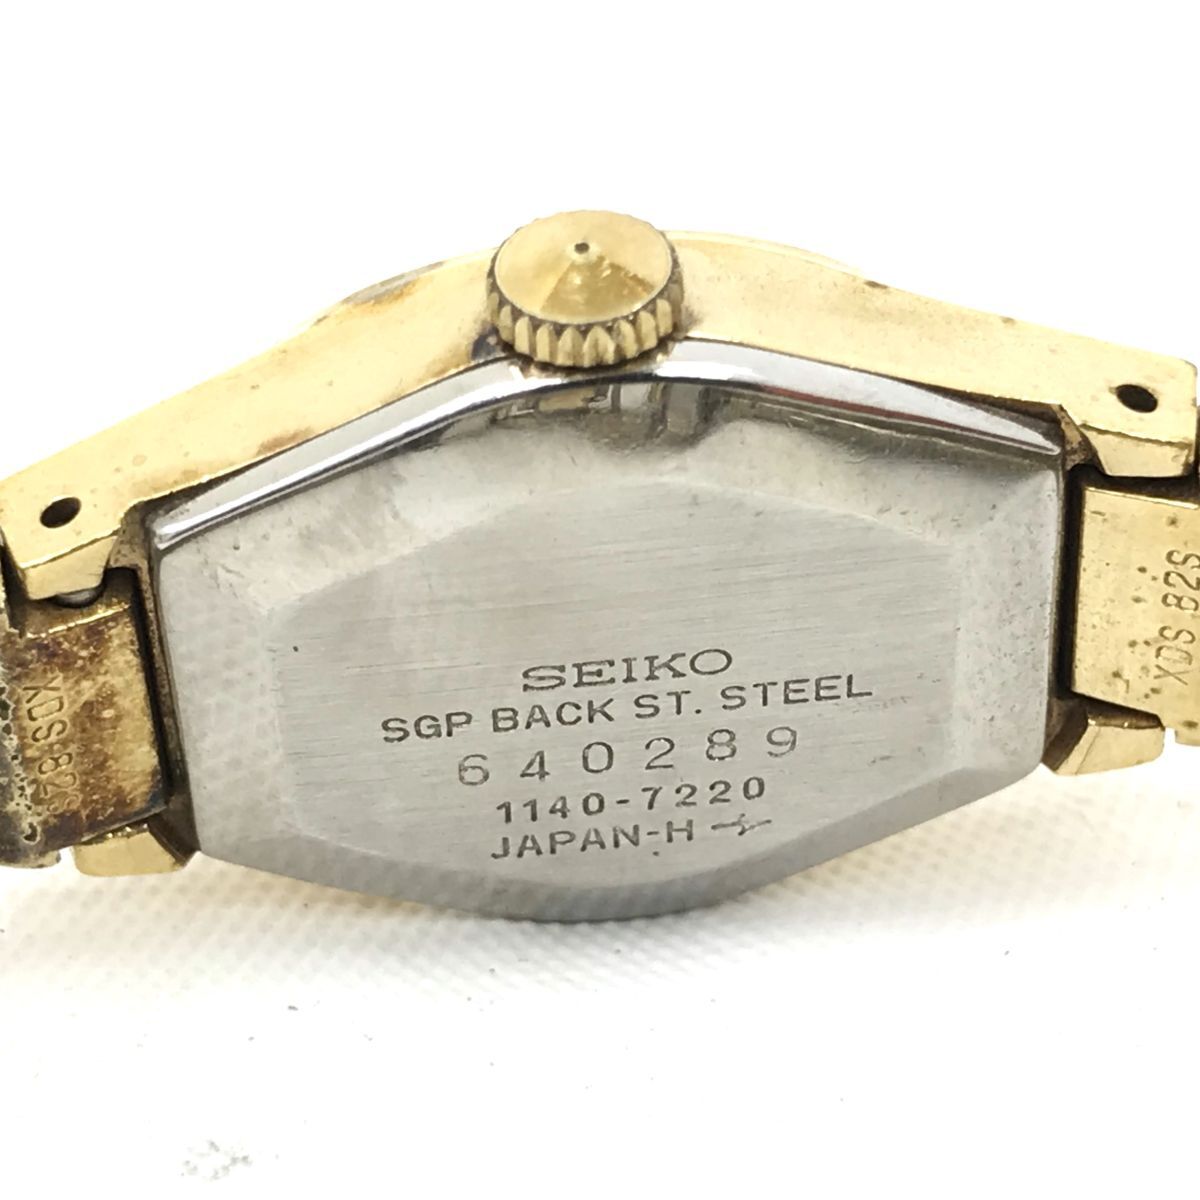 SEIKO セイコー Special 腕時計 1140-7220 手巻き アナログ オーバル シルバー ゴールド ヴィンテージ 亀戸精工舎 1979年製 動作確認済み_画像6